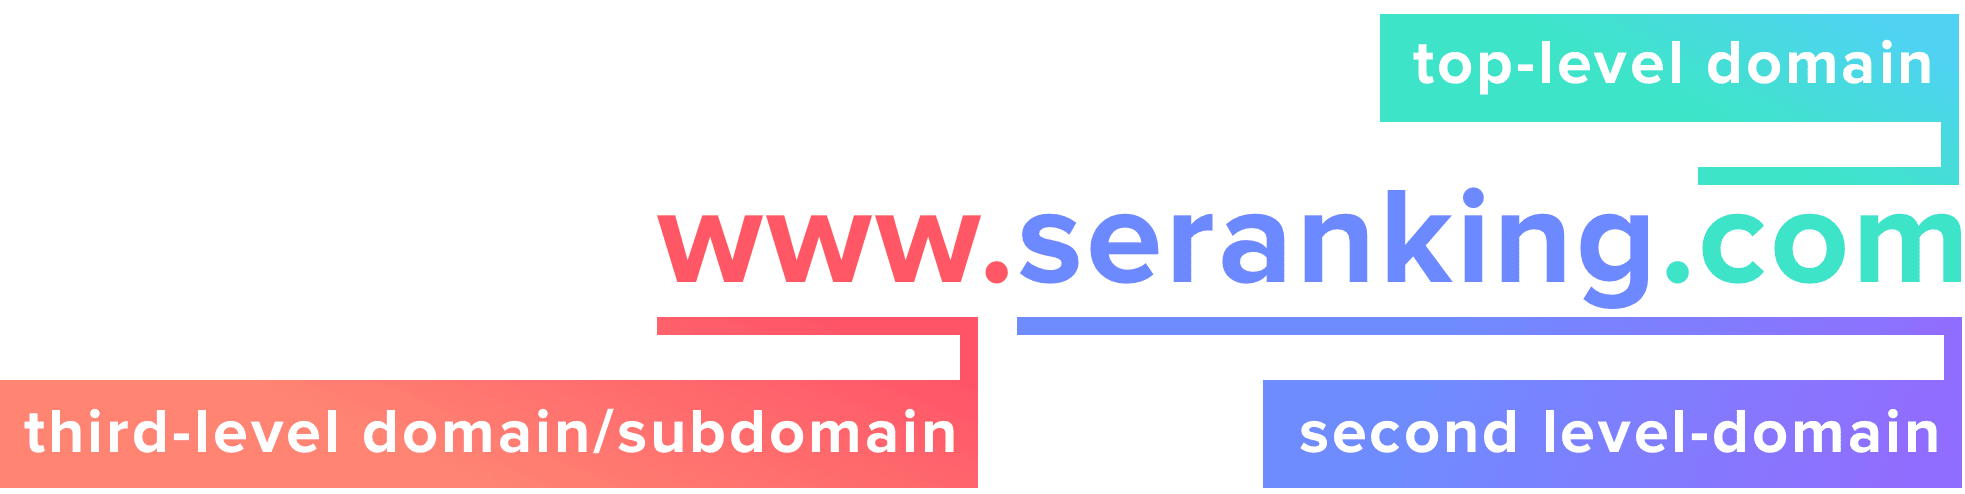 www-seranking-com-domain-structure